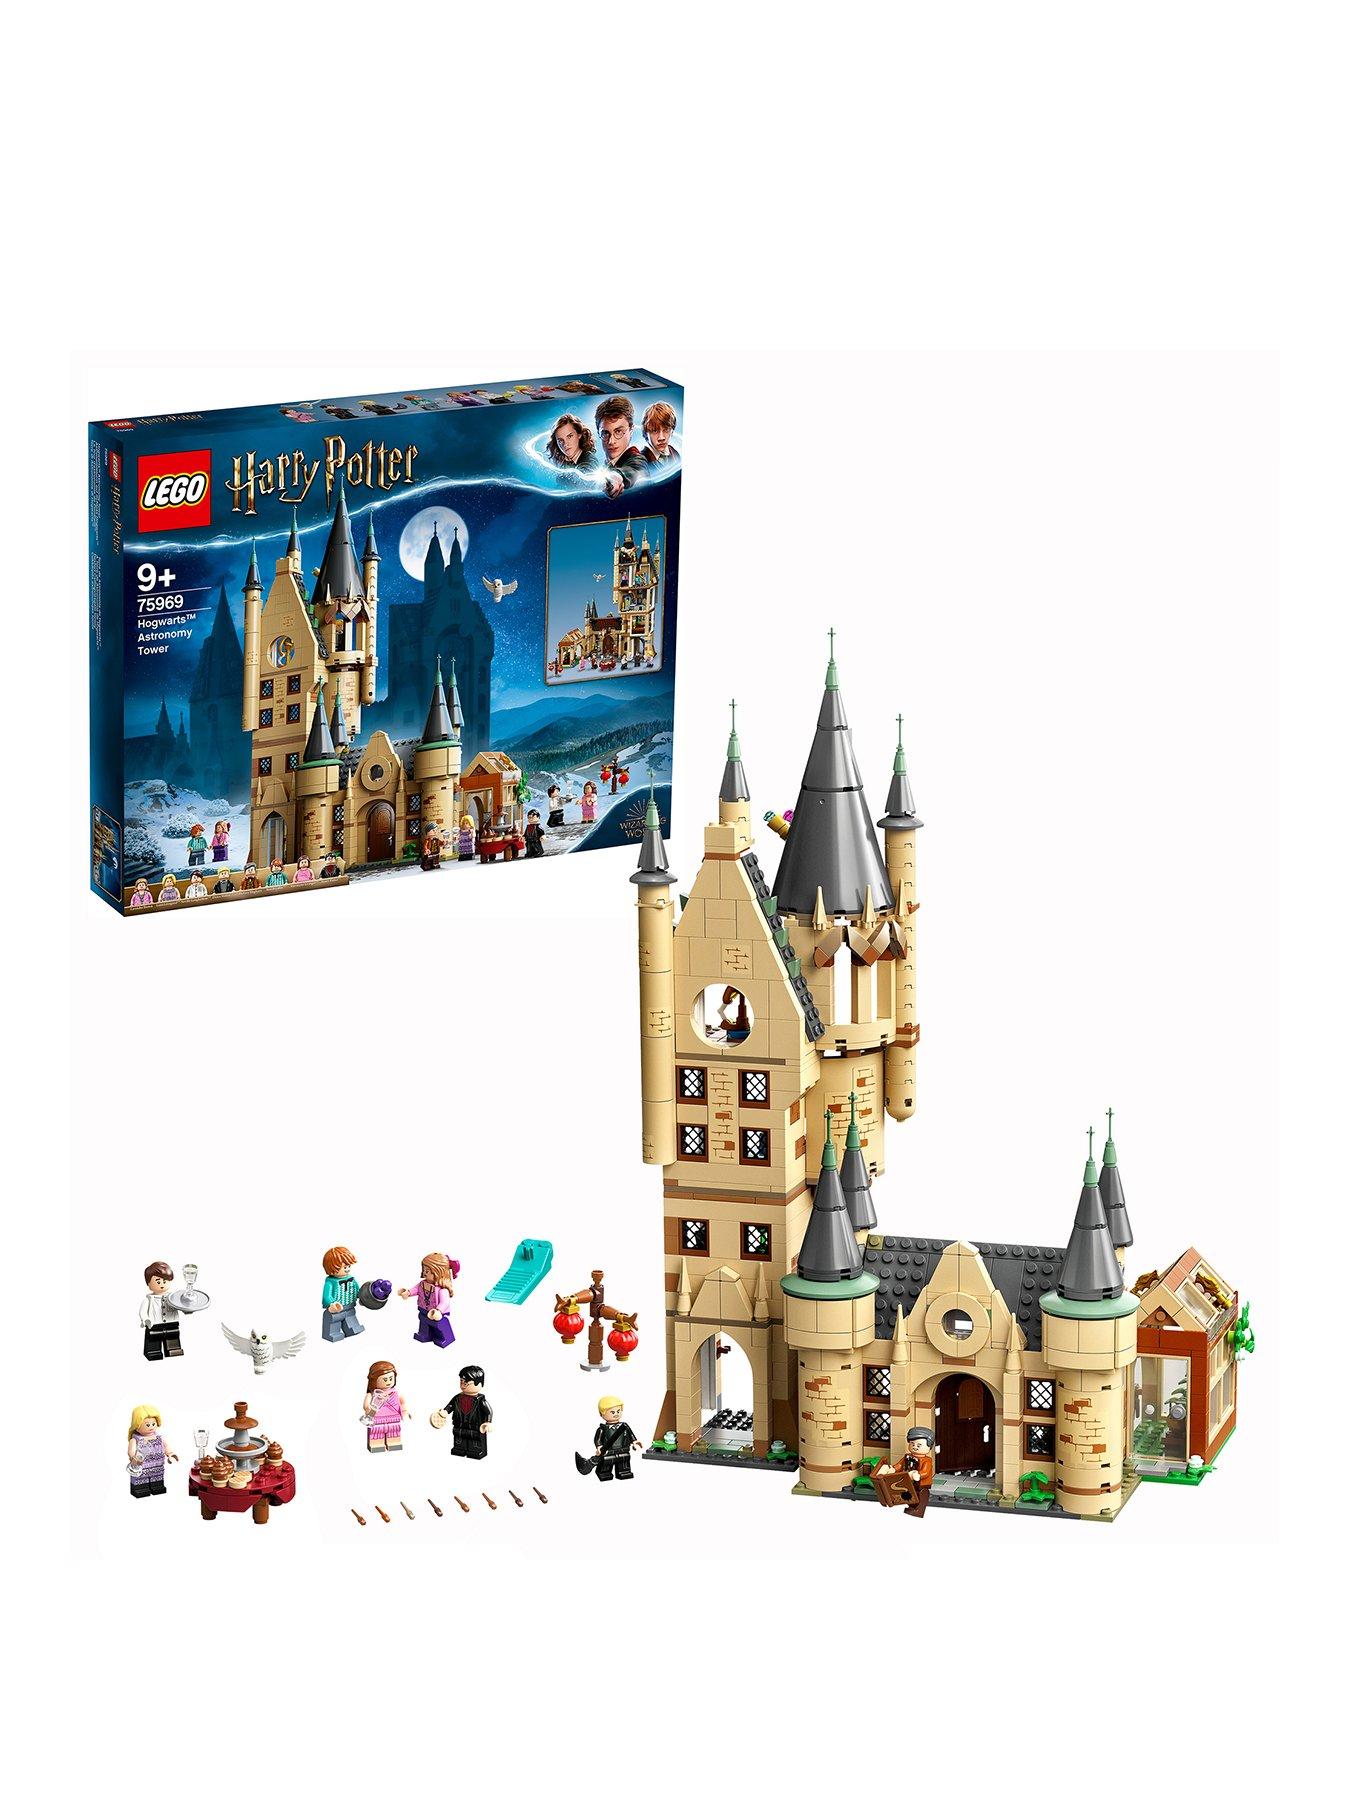 Details about   Harry potter hogwarts building bricks bote clock tower Puzzle building block toy 